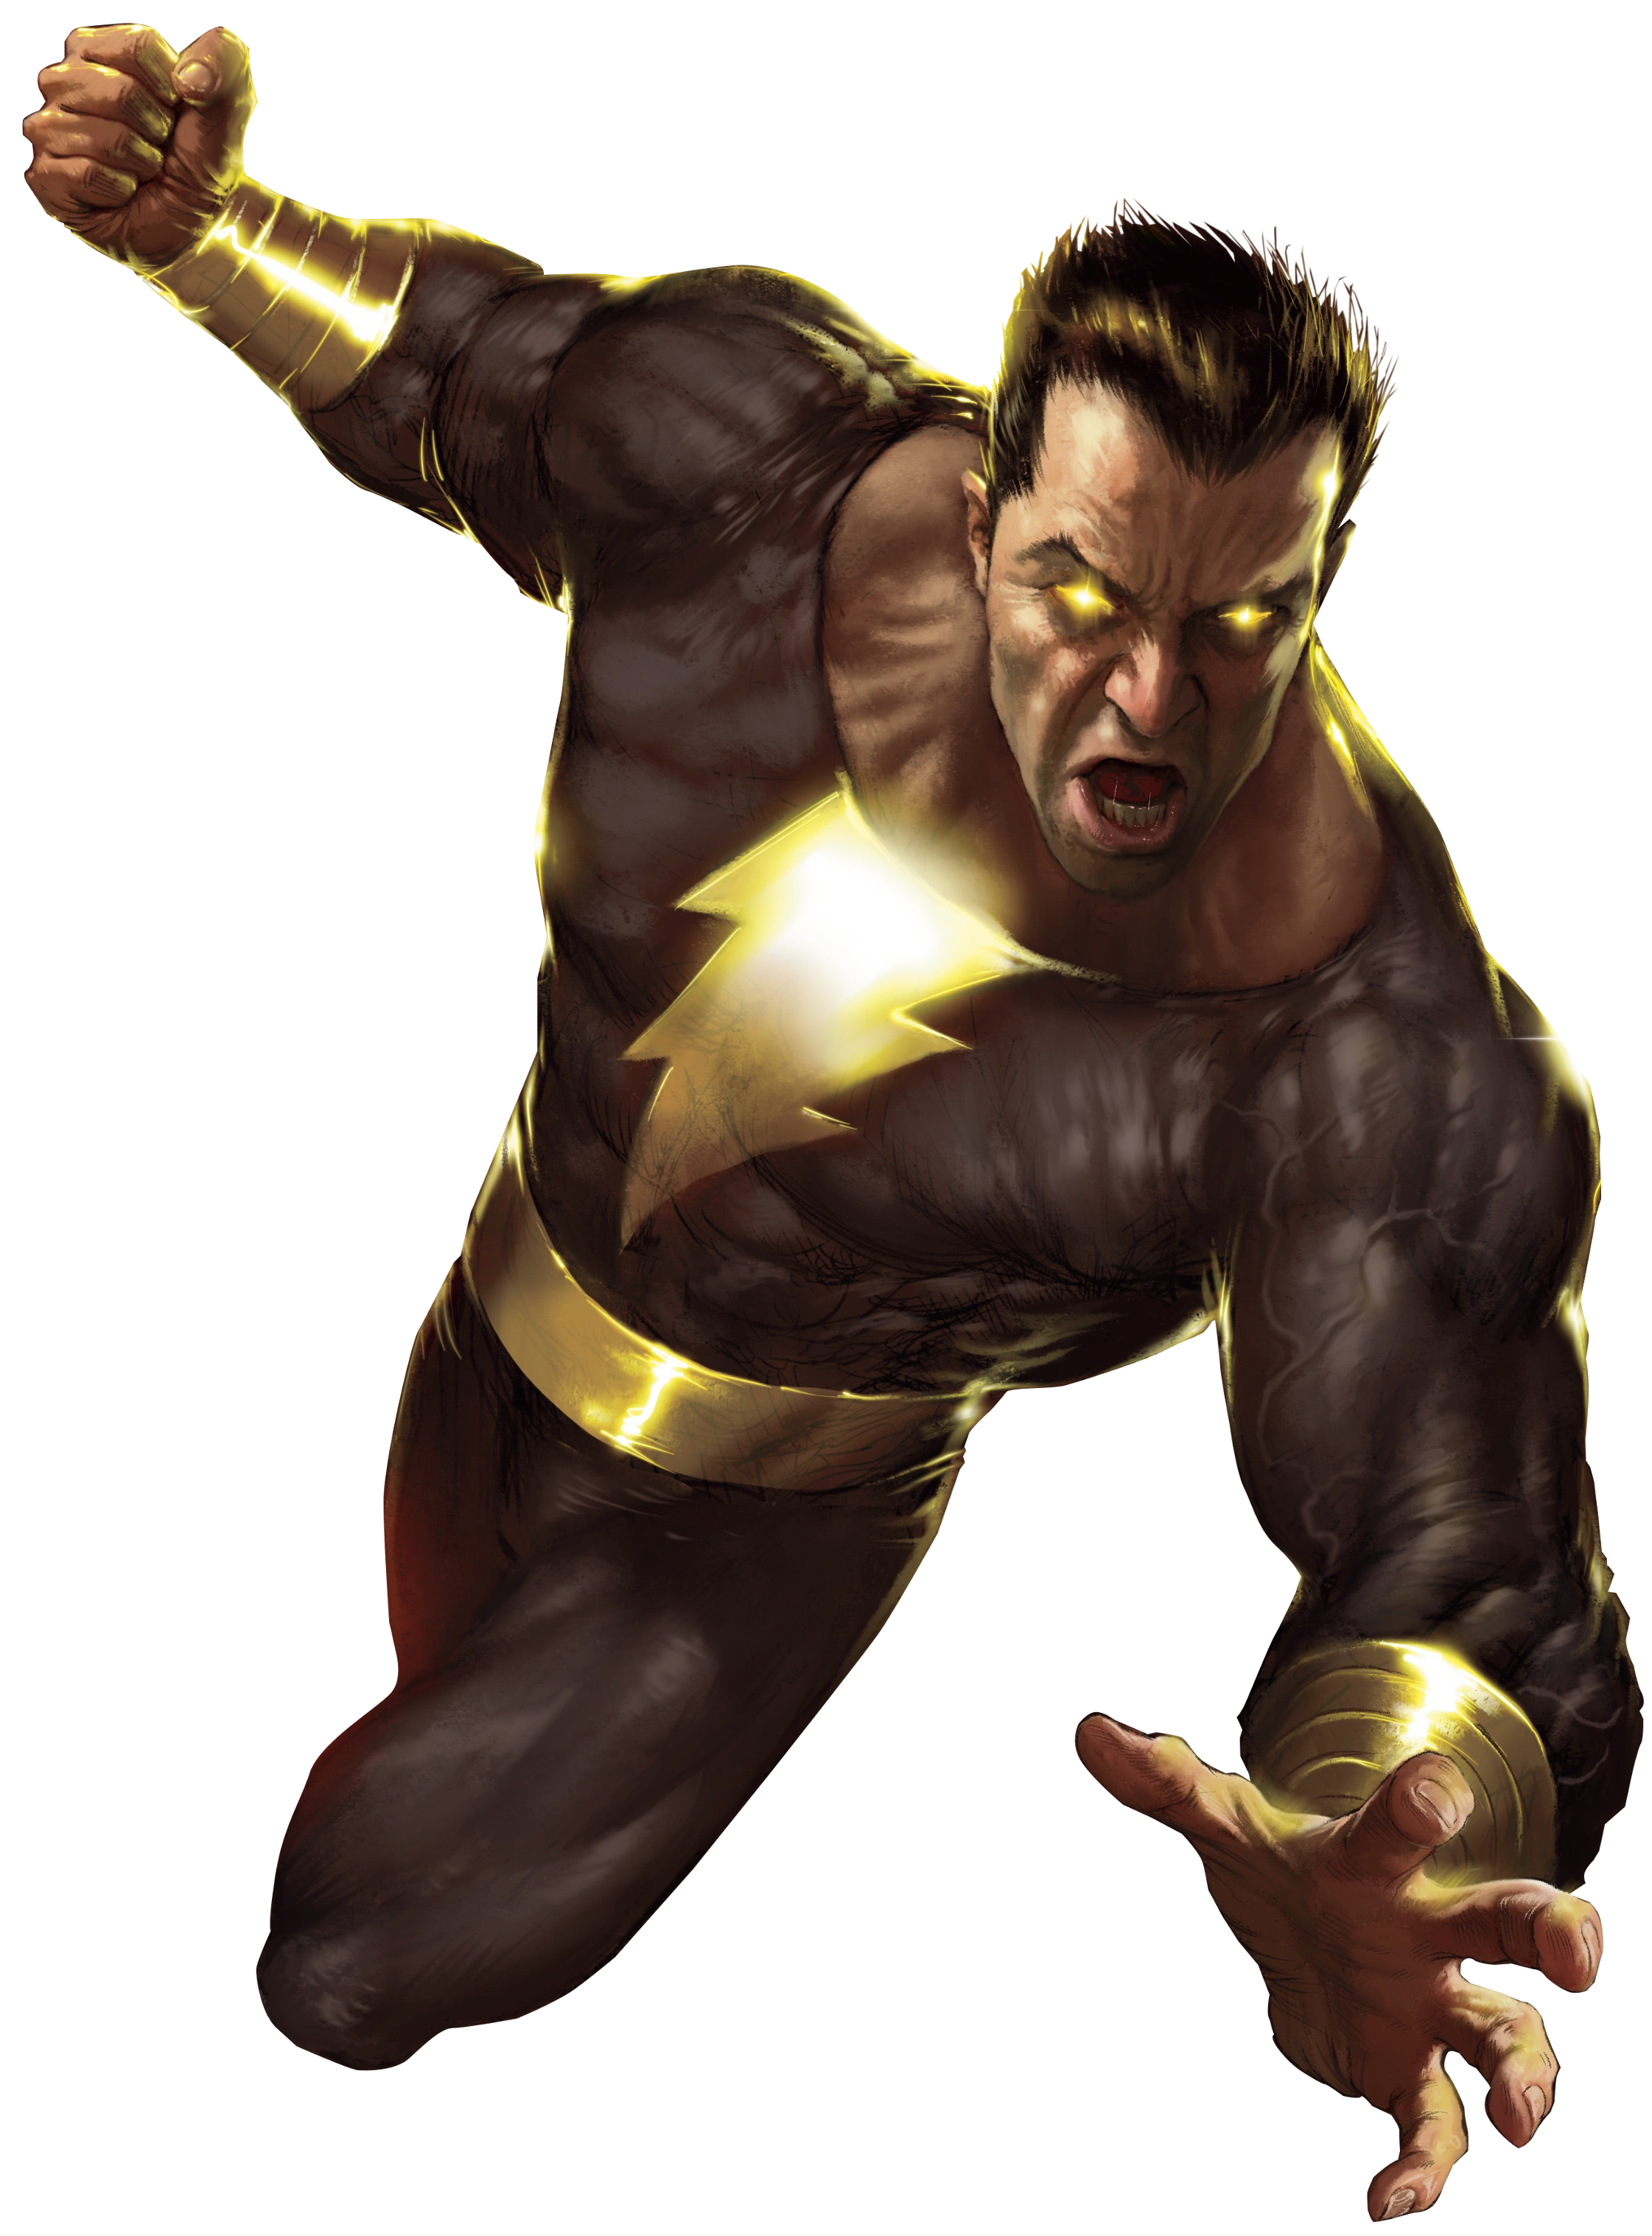 Black Adam, Wiki DC Comics Extended Universe